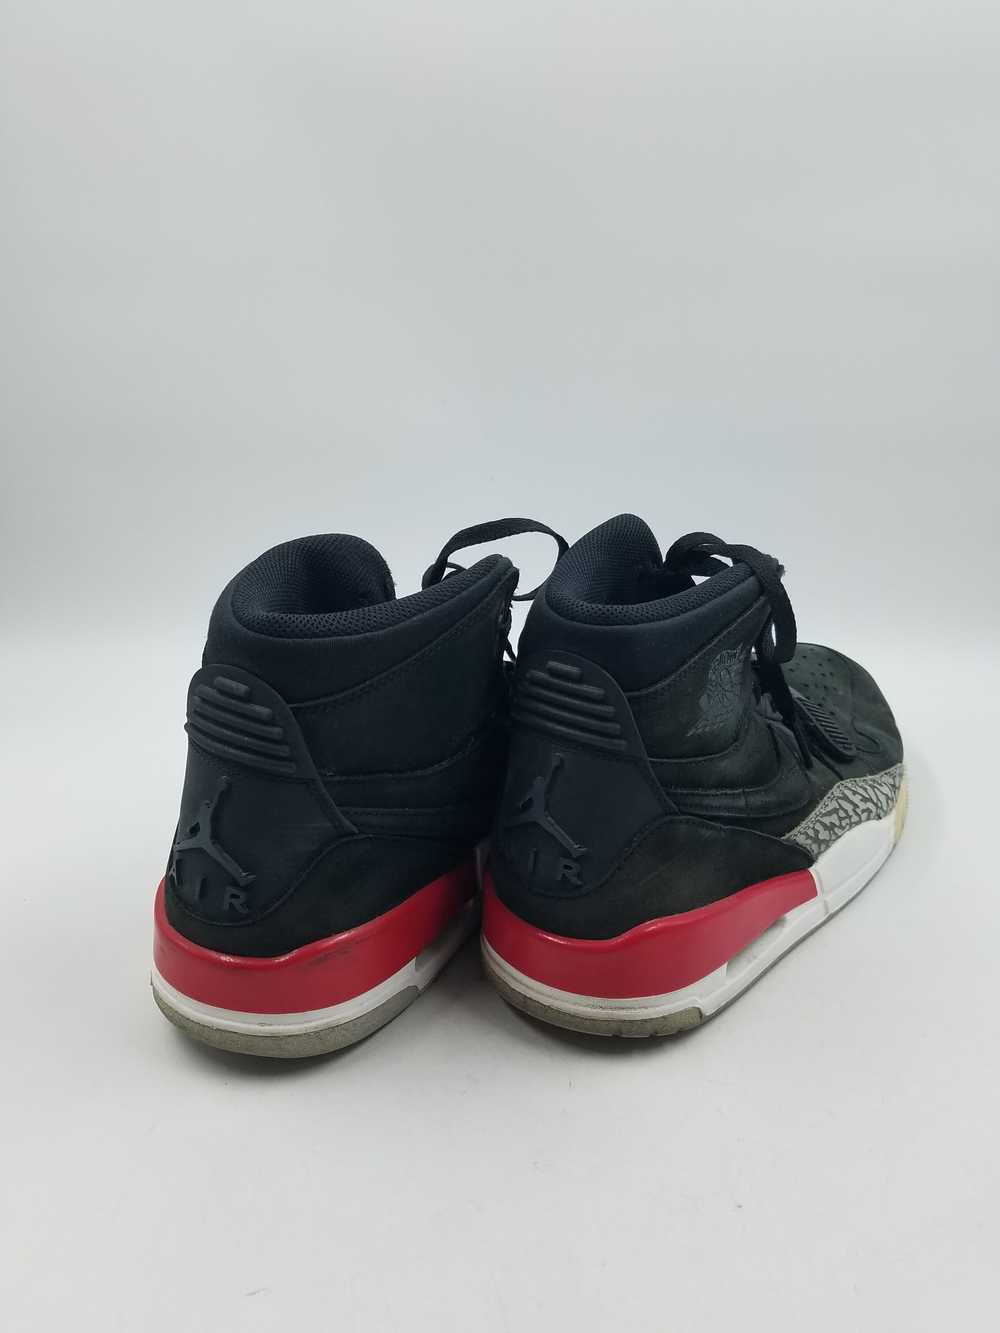 Nike Air Jordan Legacy 312 Black Suede Men's 11 - image 4